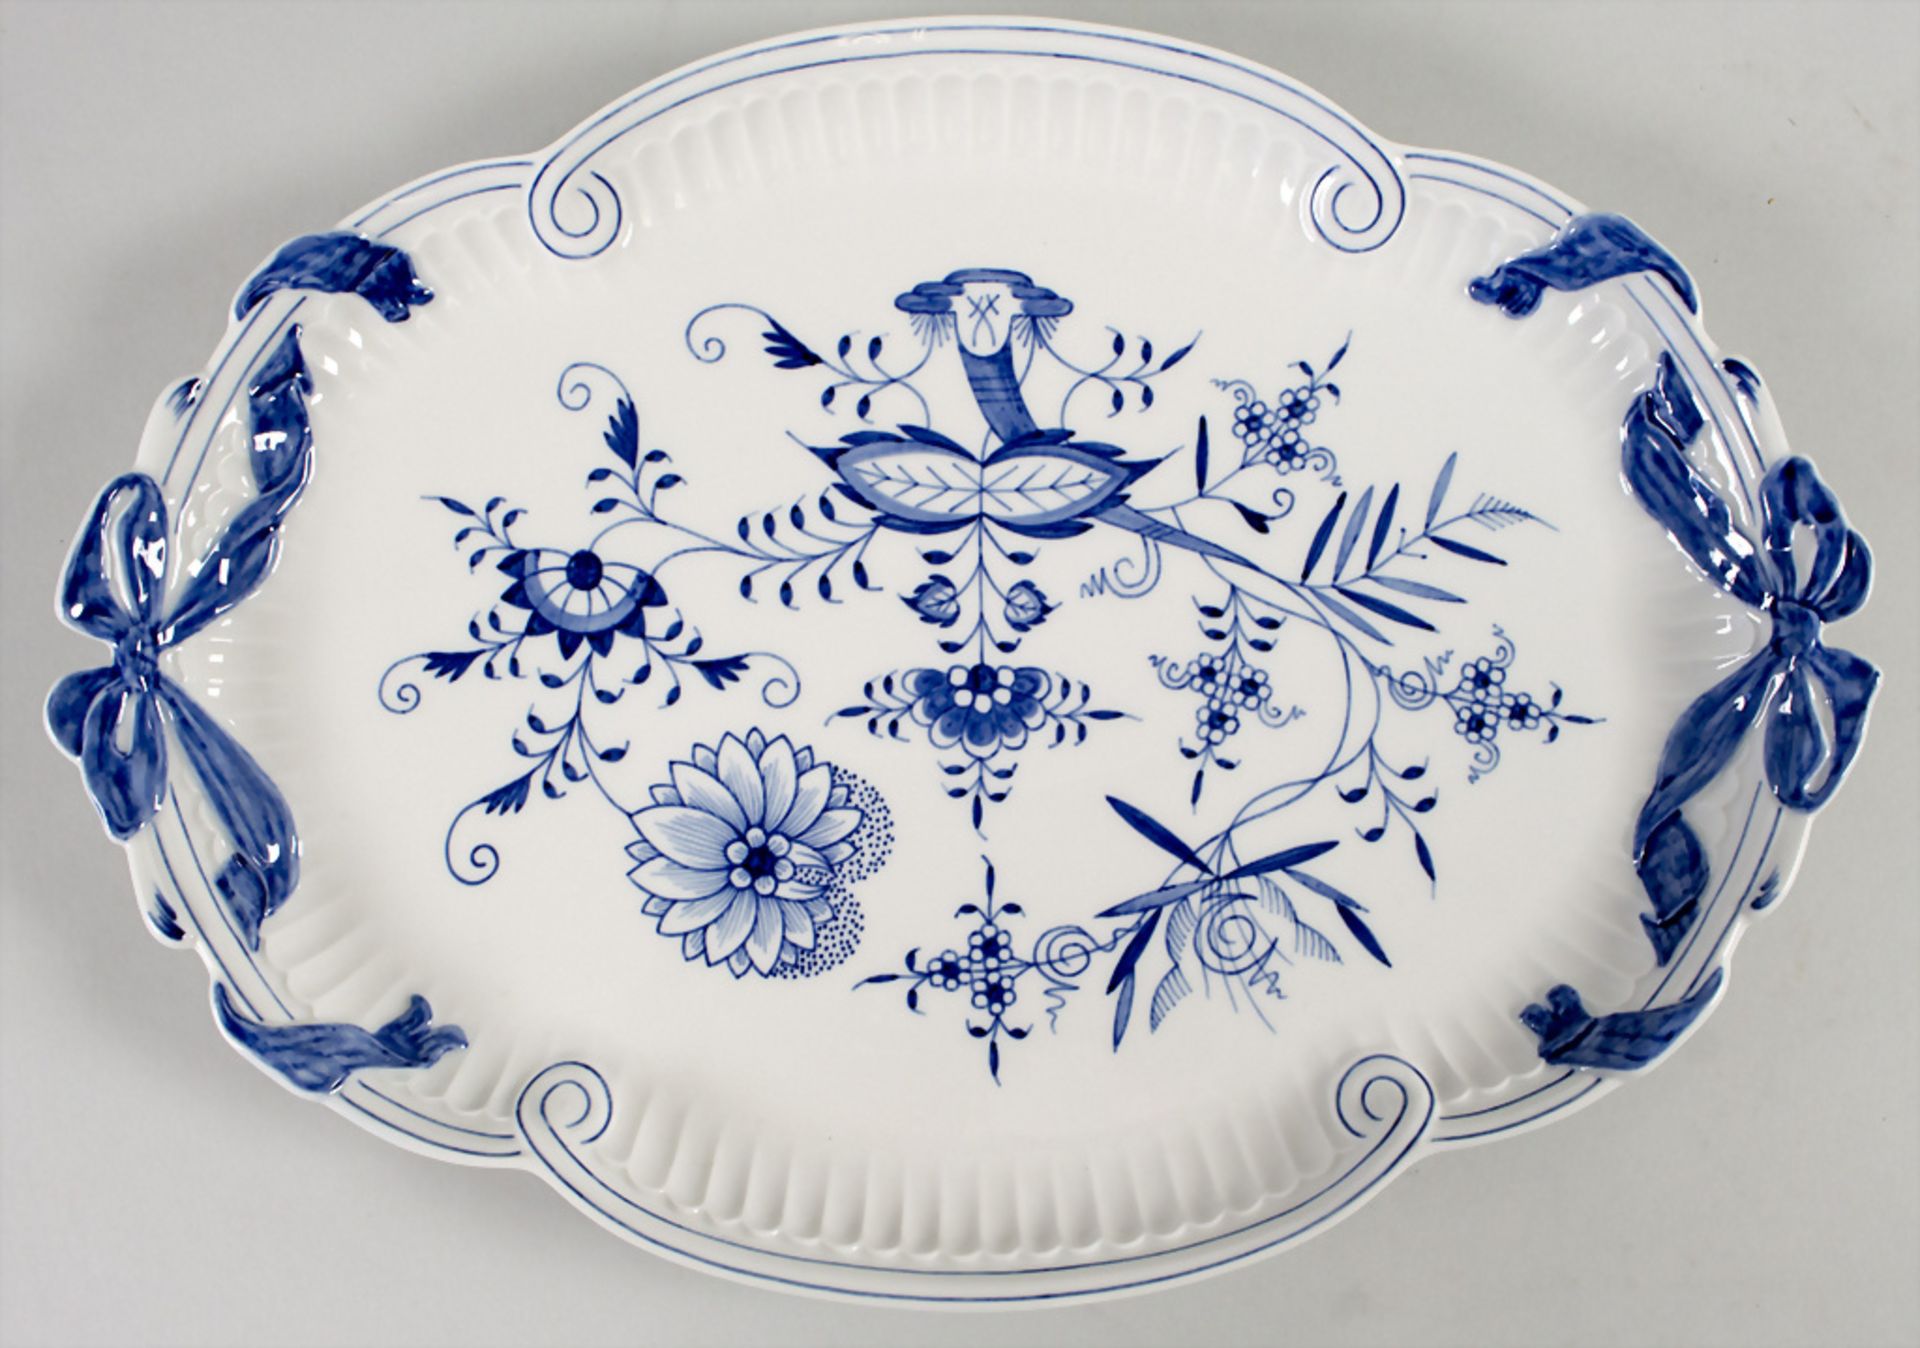 Zwiebelmuster Servierplatte / A serving plate with onion pattern, Meissen, 1989